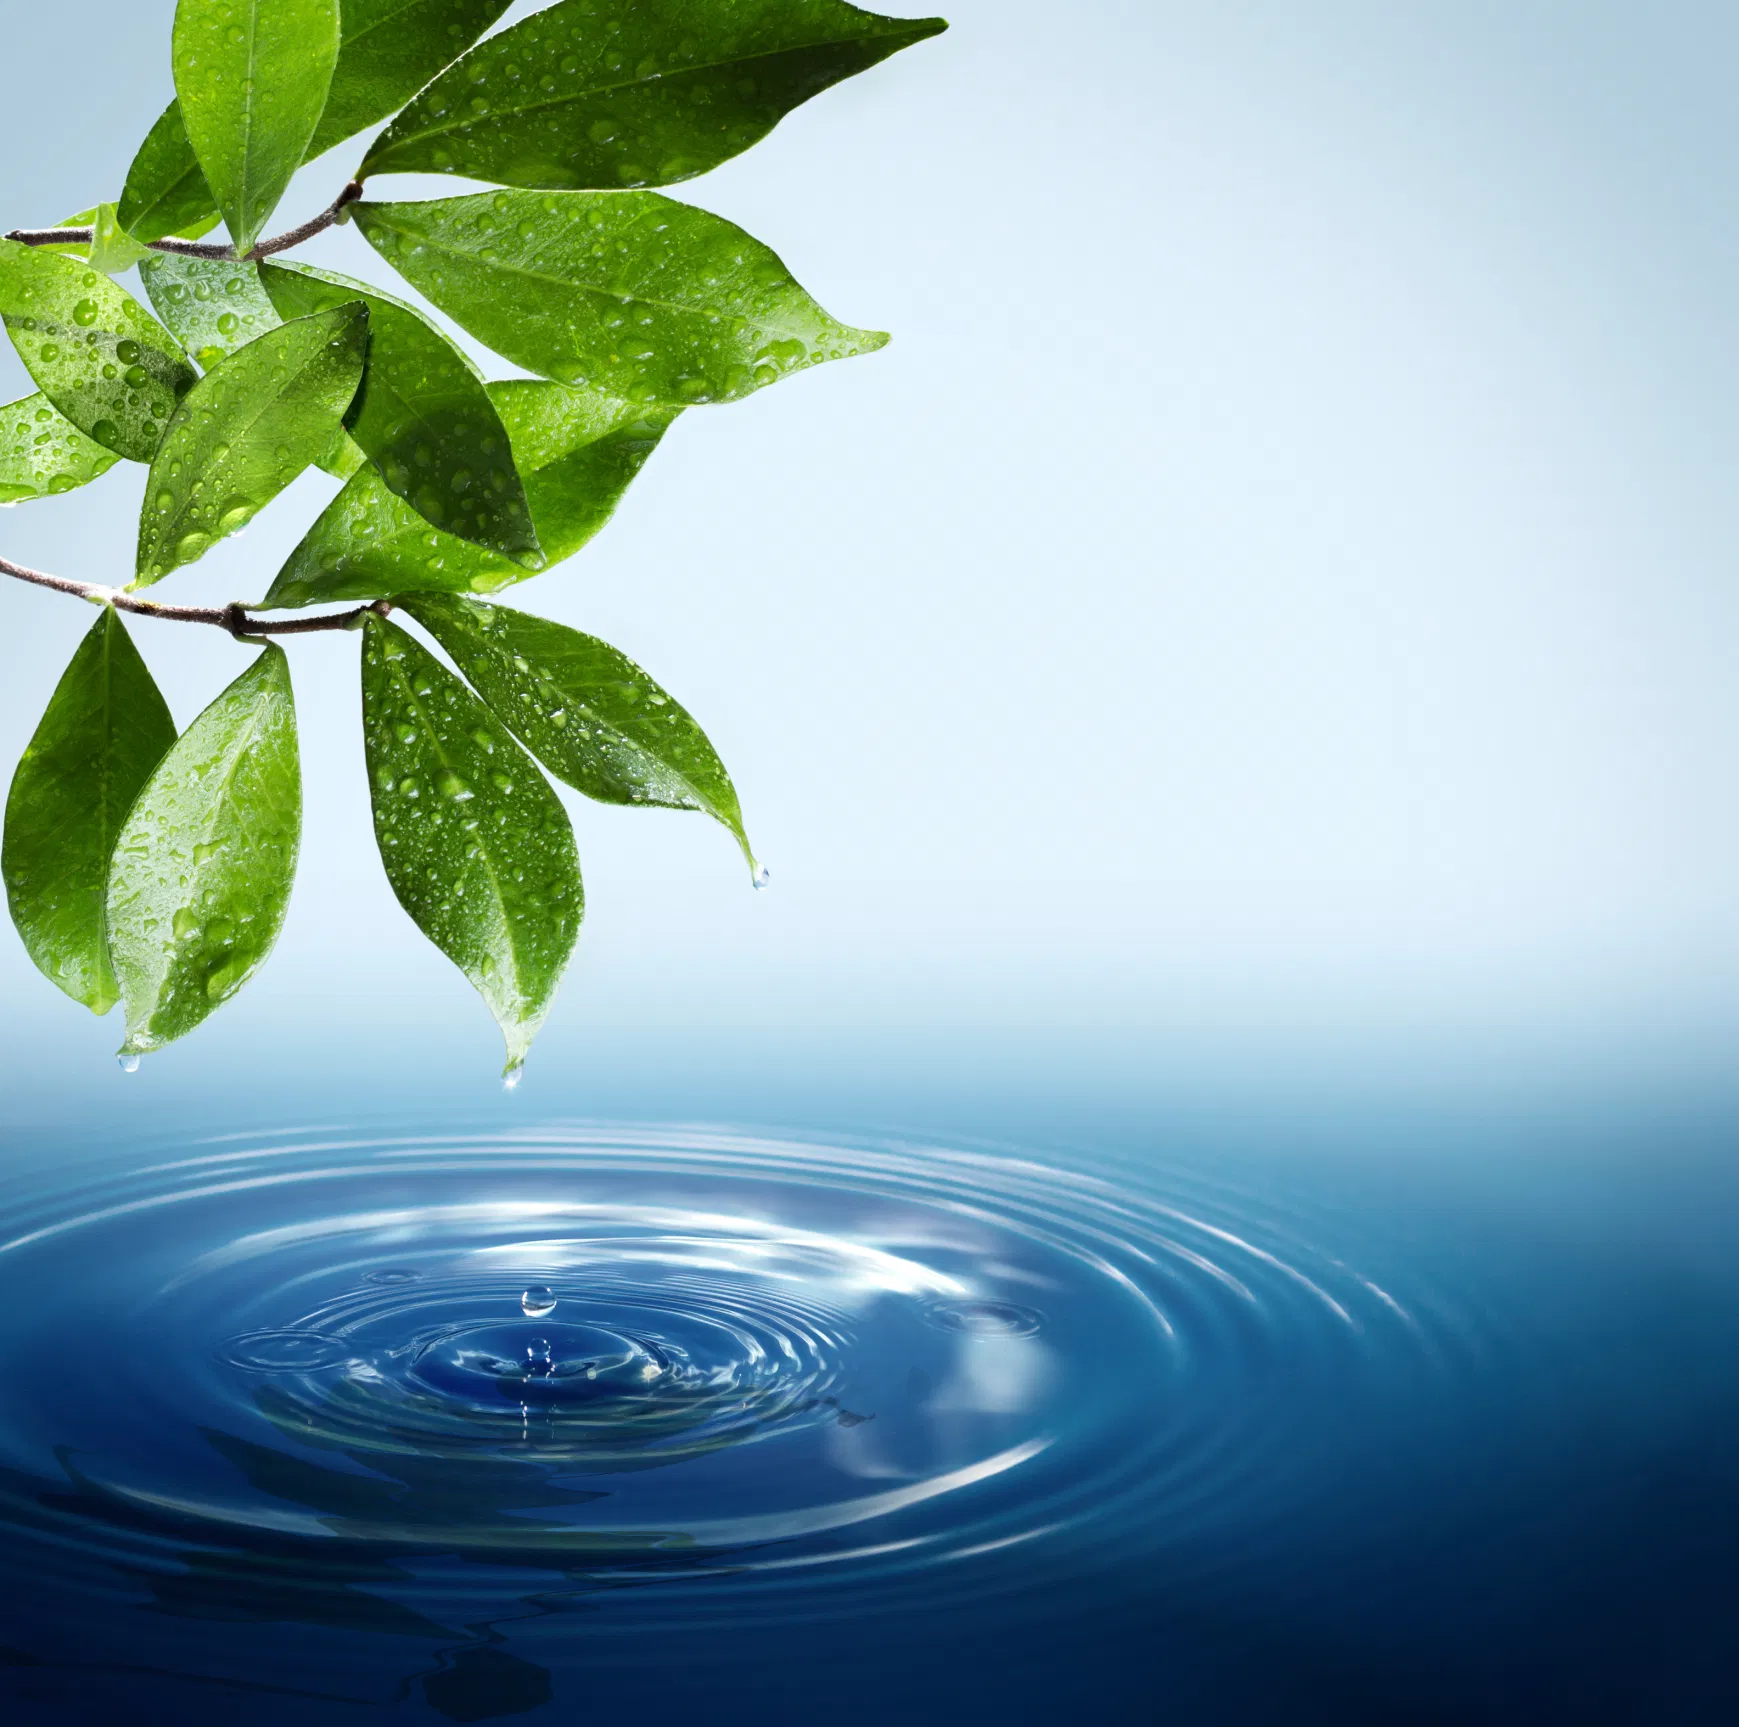 Листья на воде. Листик на воде. Фон вода и листья. Круглый листик на воду. 1 вода 2020